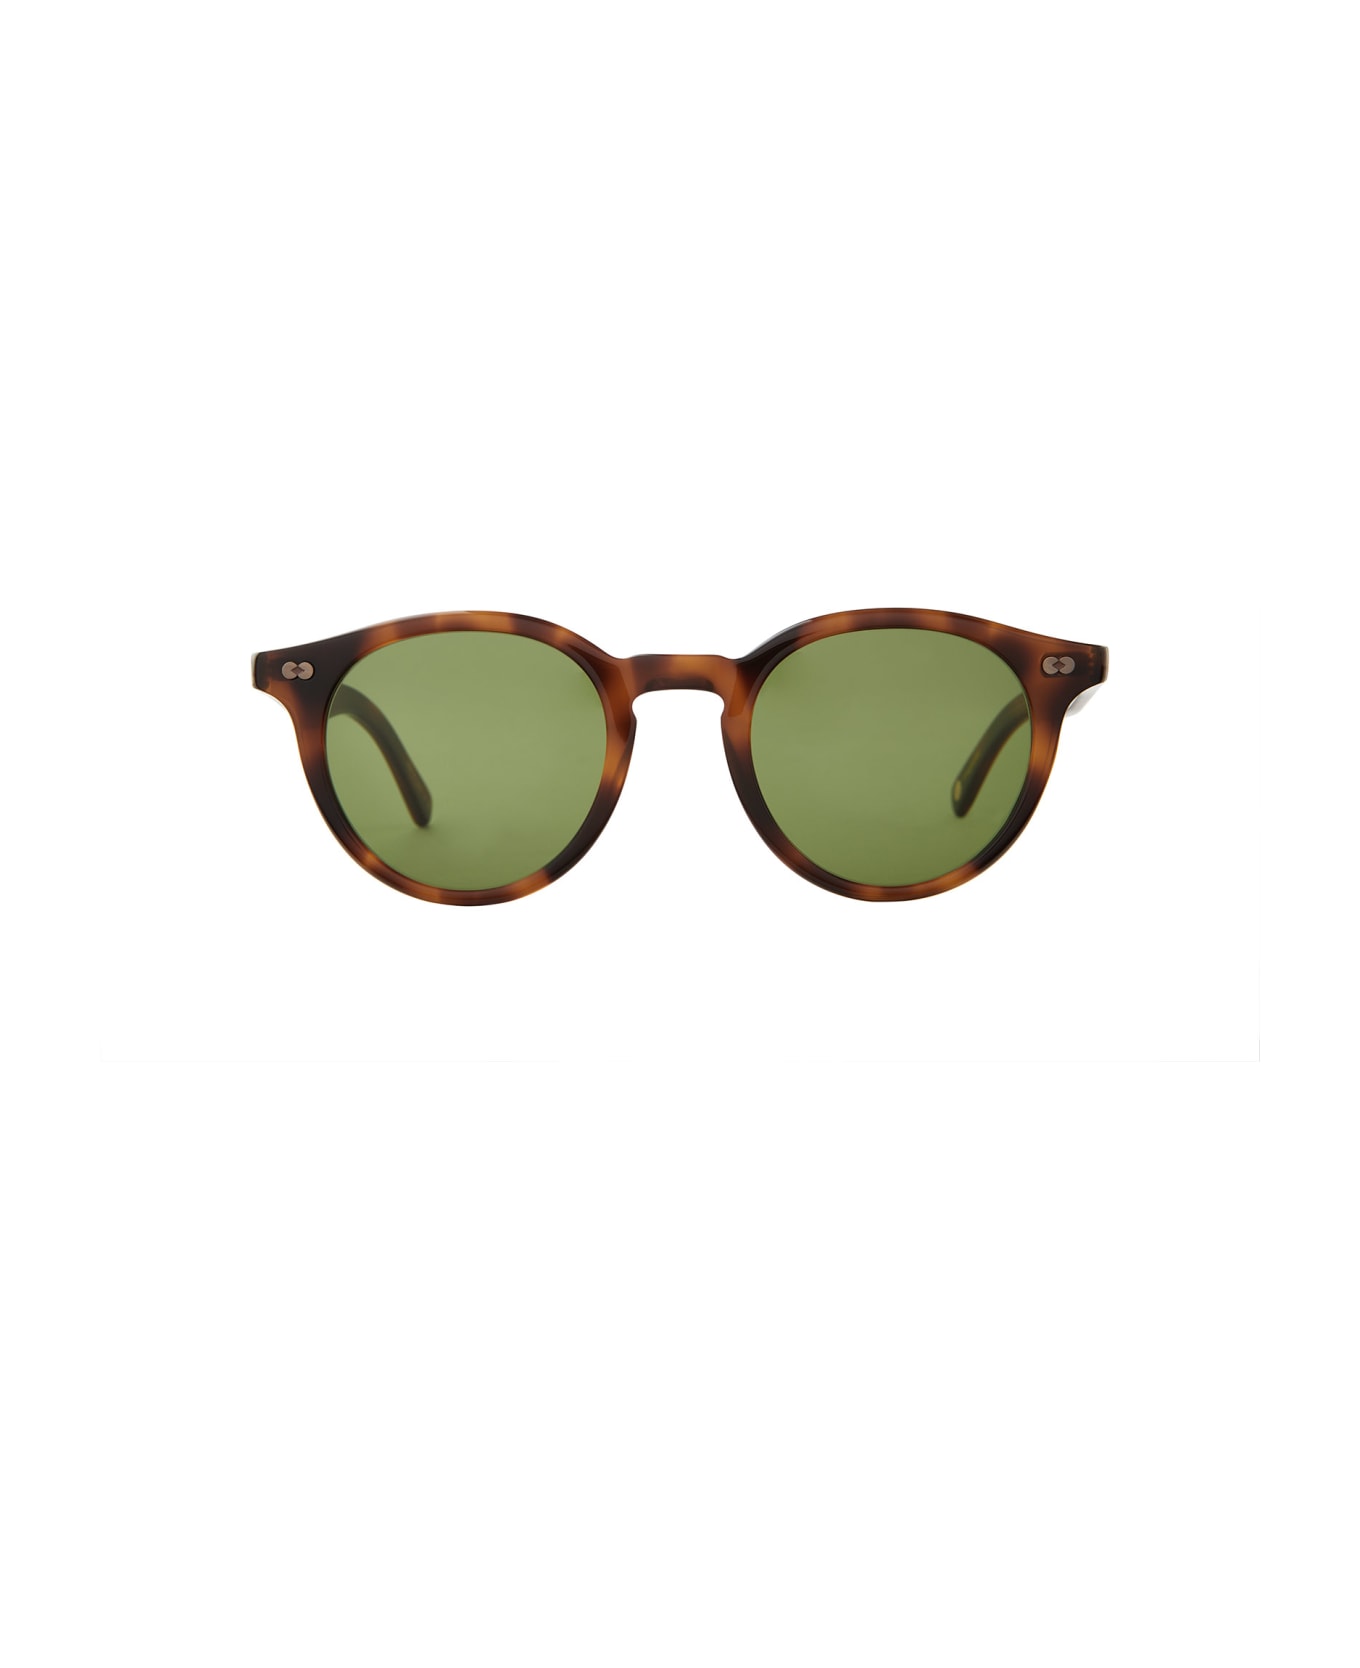 Garrett Leight Clune X Sun Spotted Brown Shell Sunglasses - Spotted Brown Shell